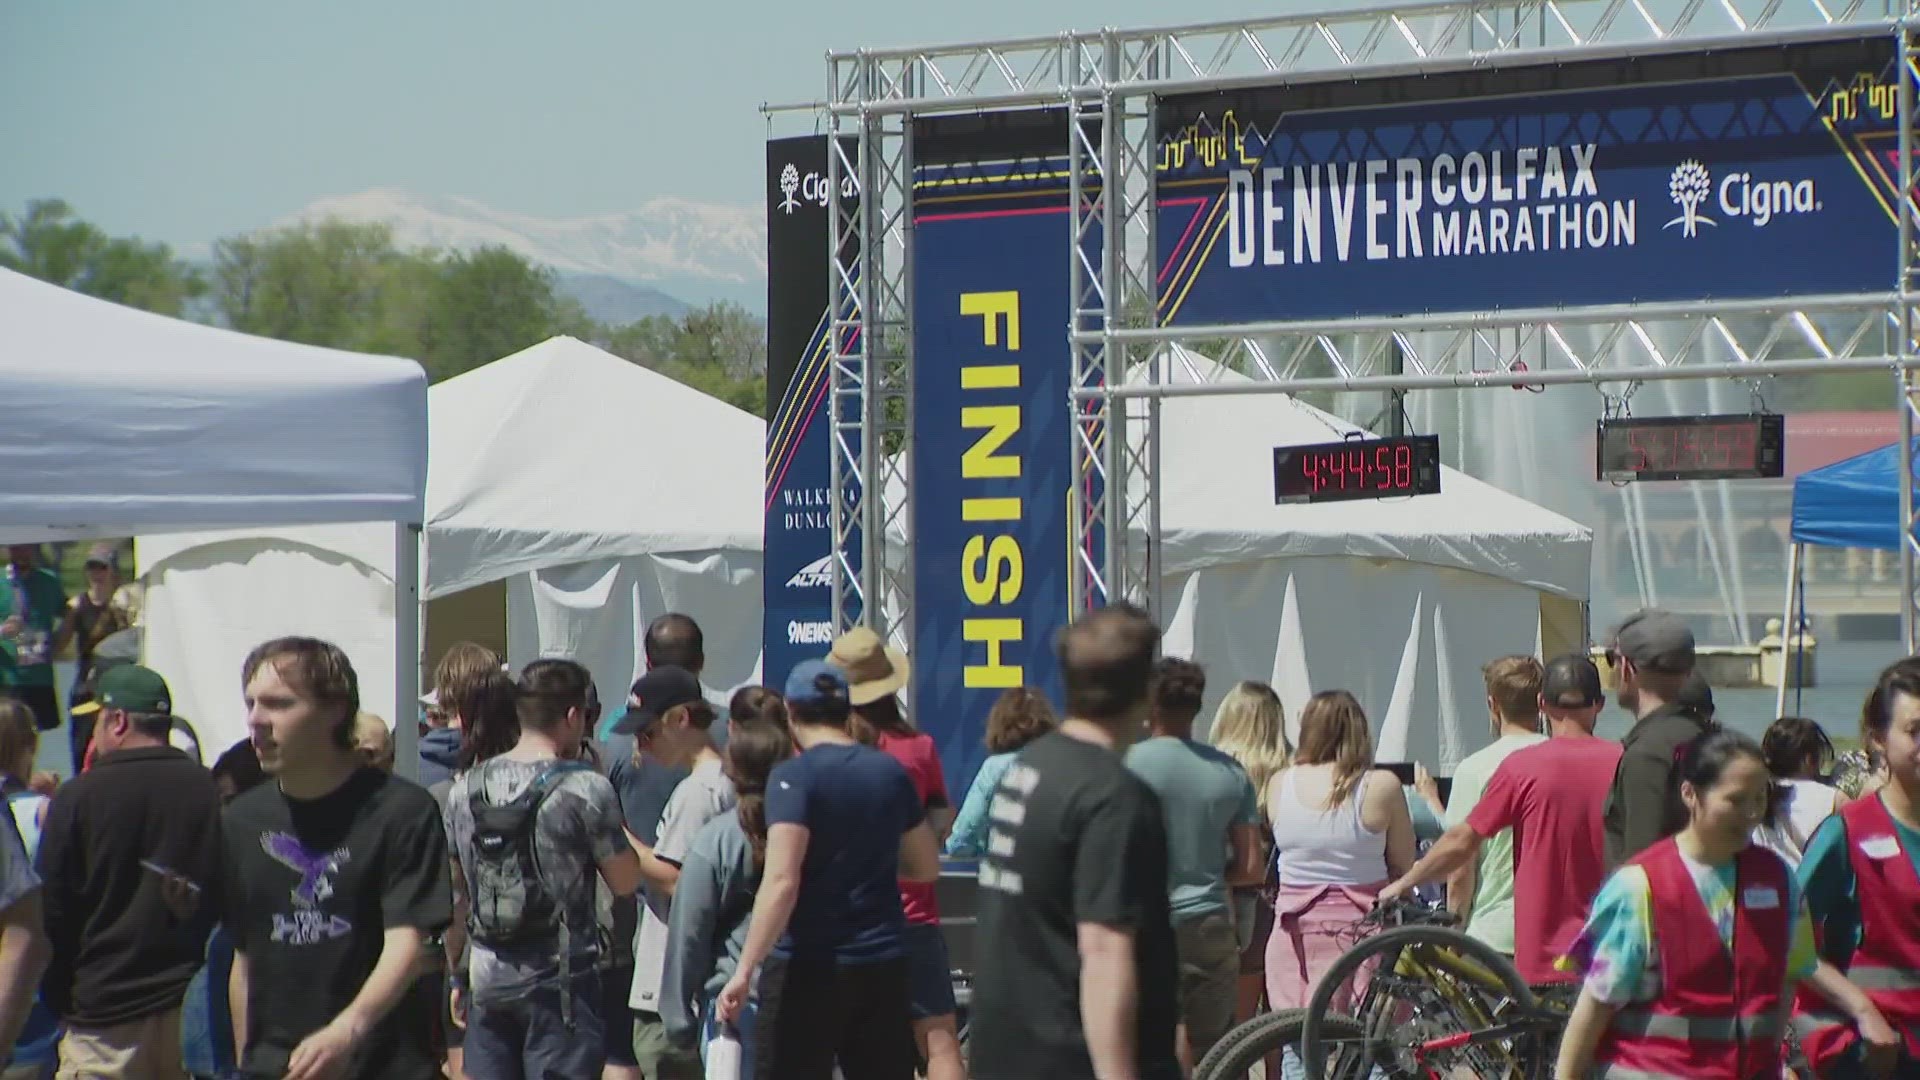 Denver Colfax Marathon race organizers said the event has sold out its marathon (26.2 mile) race distance ahead of Sunday's race.